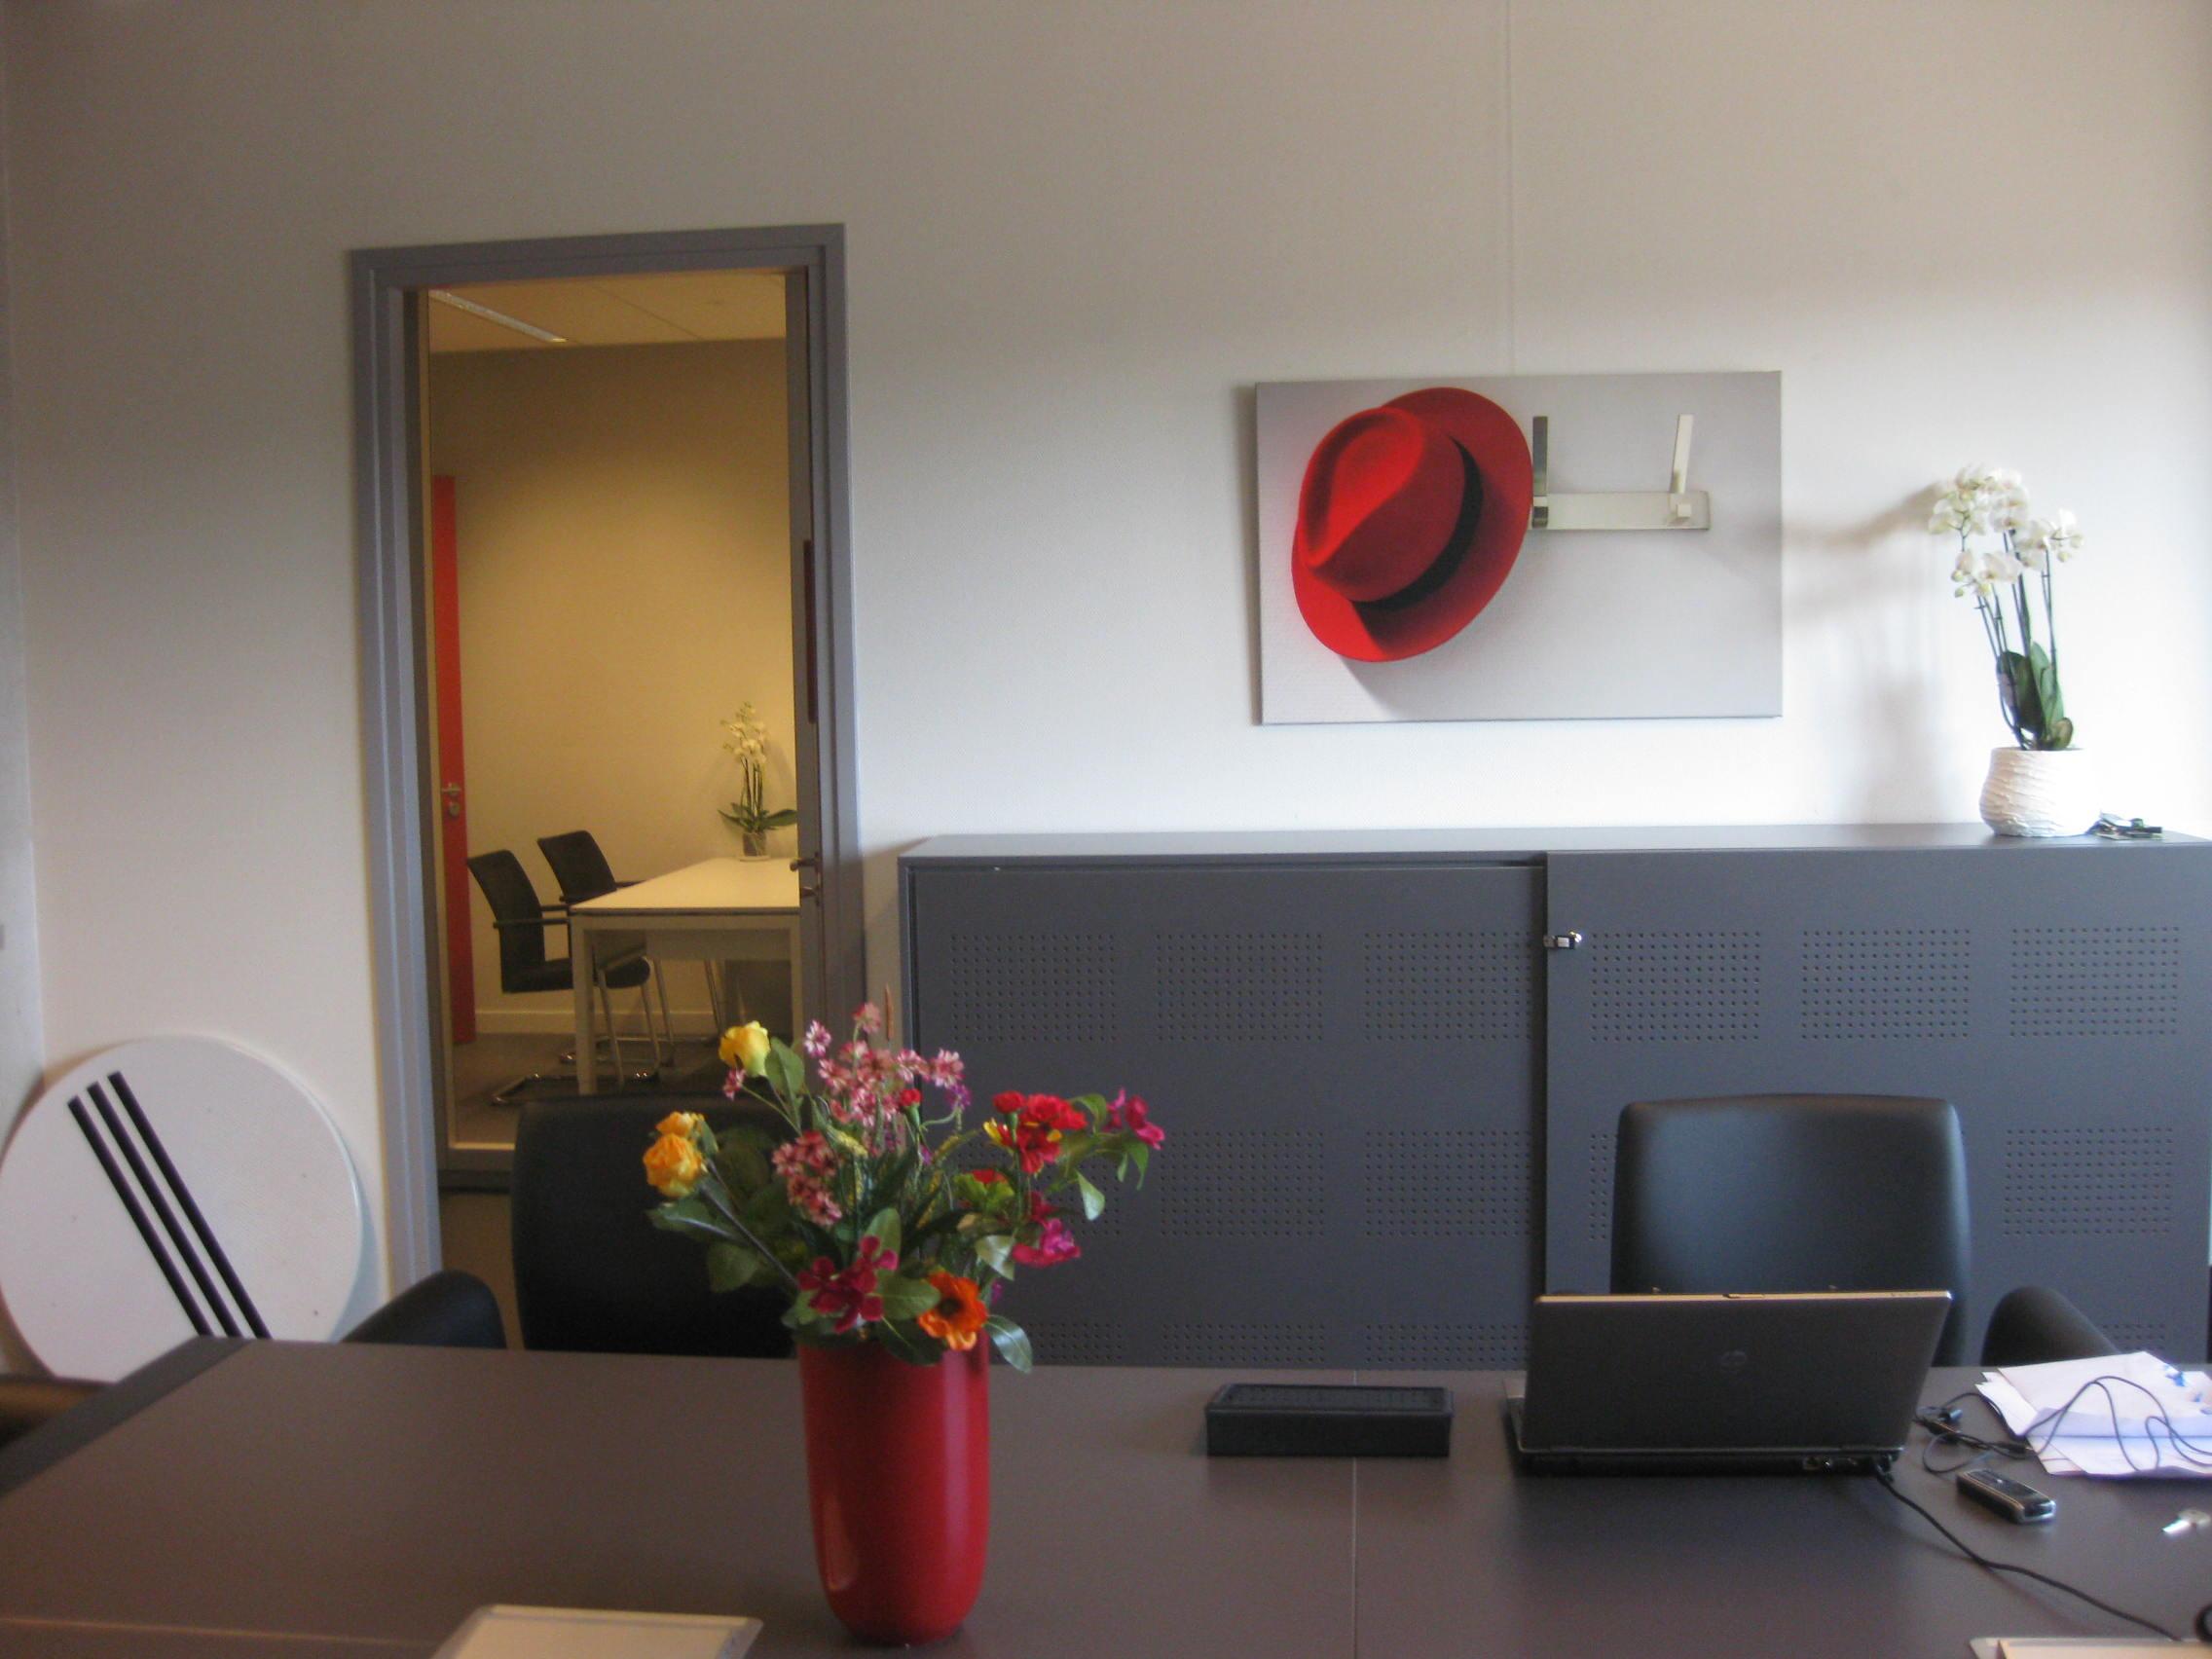 Büro mit Blumenstauß und ... Wandbild? #büro #arbeitszimmer ©OhMyPrints